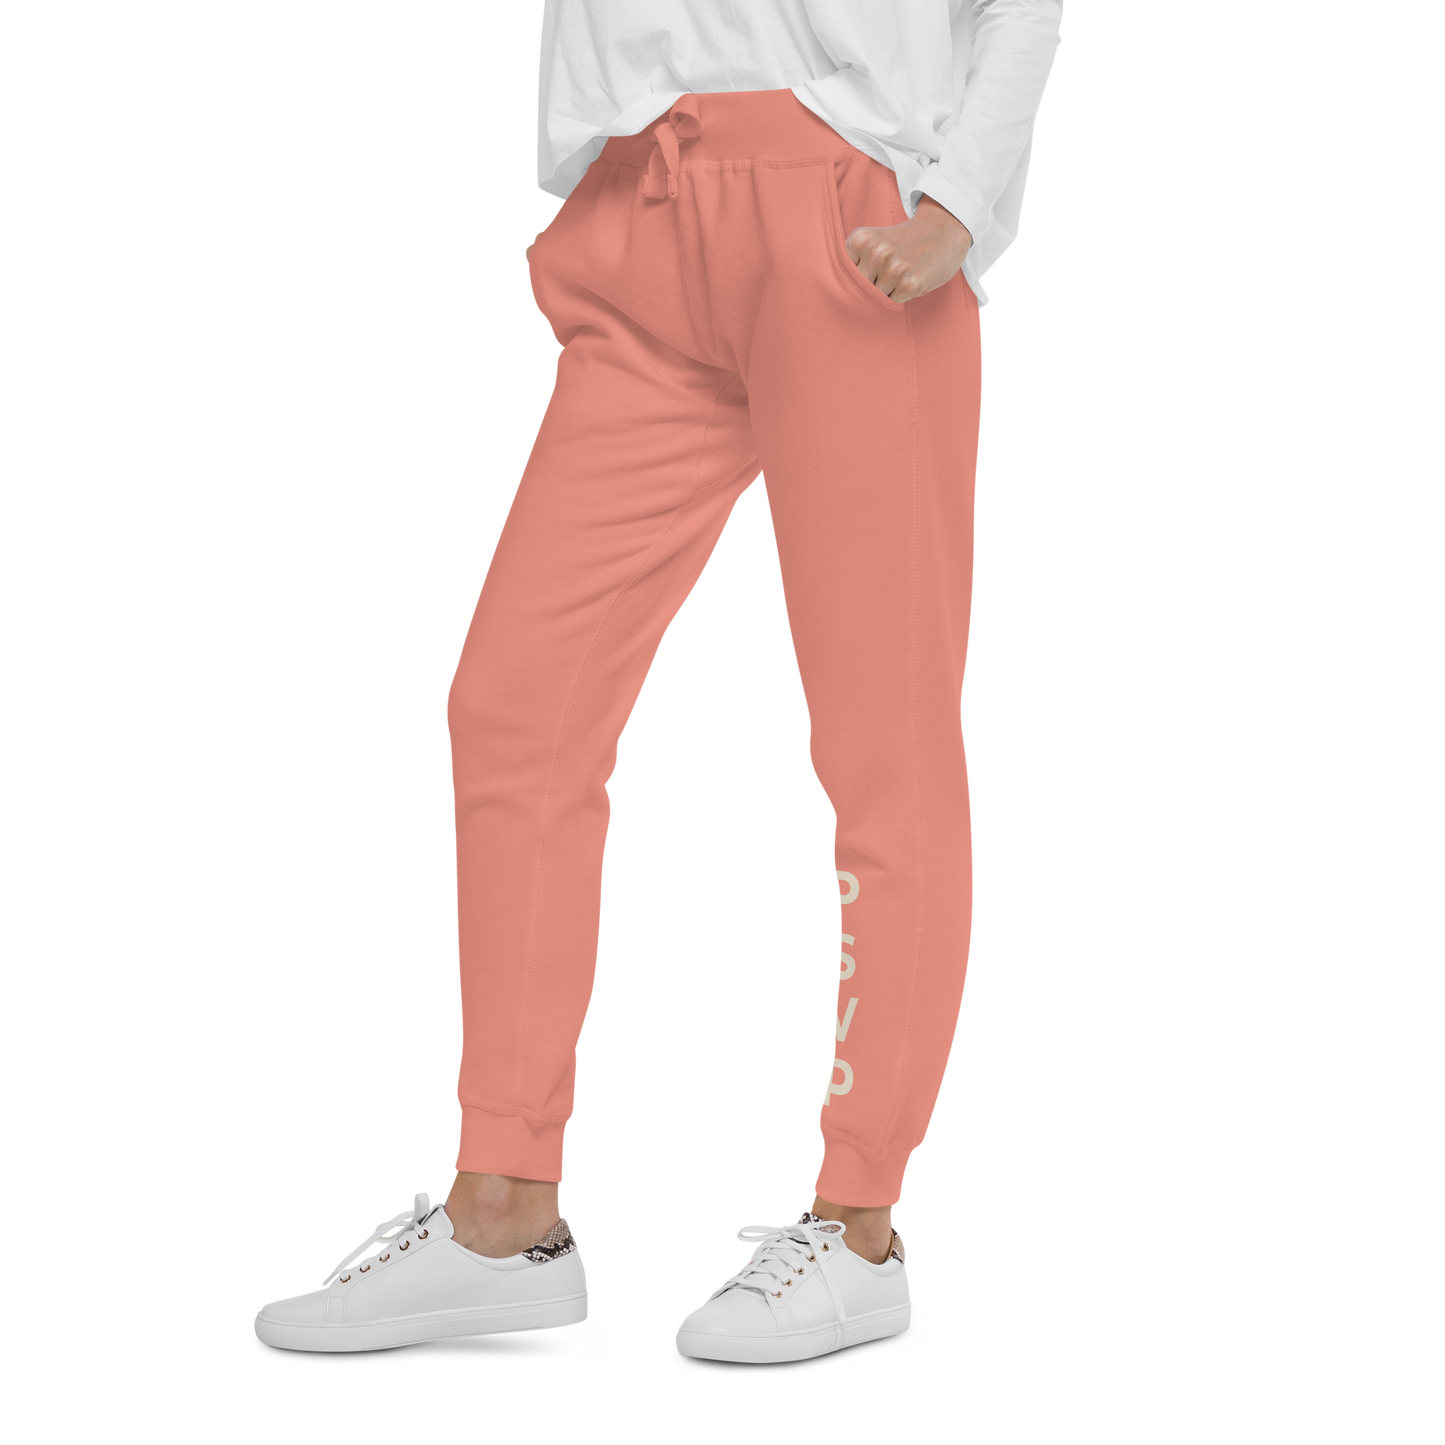 Women's Fleece Pink Sweatpants - PSVP Cream | Sweatpants | PARADIS SVP